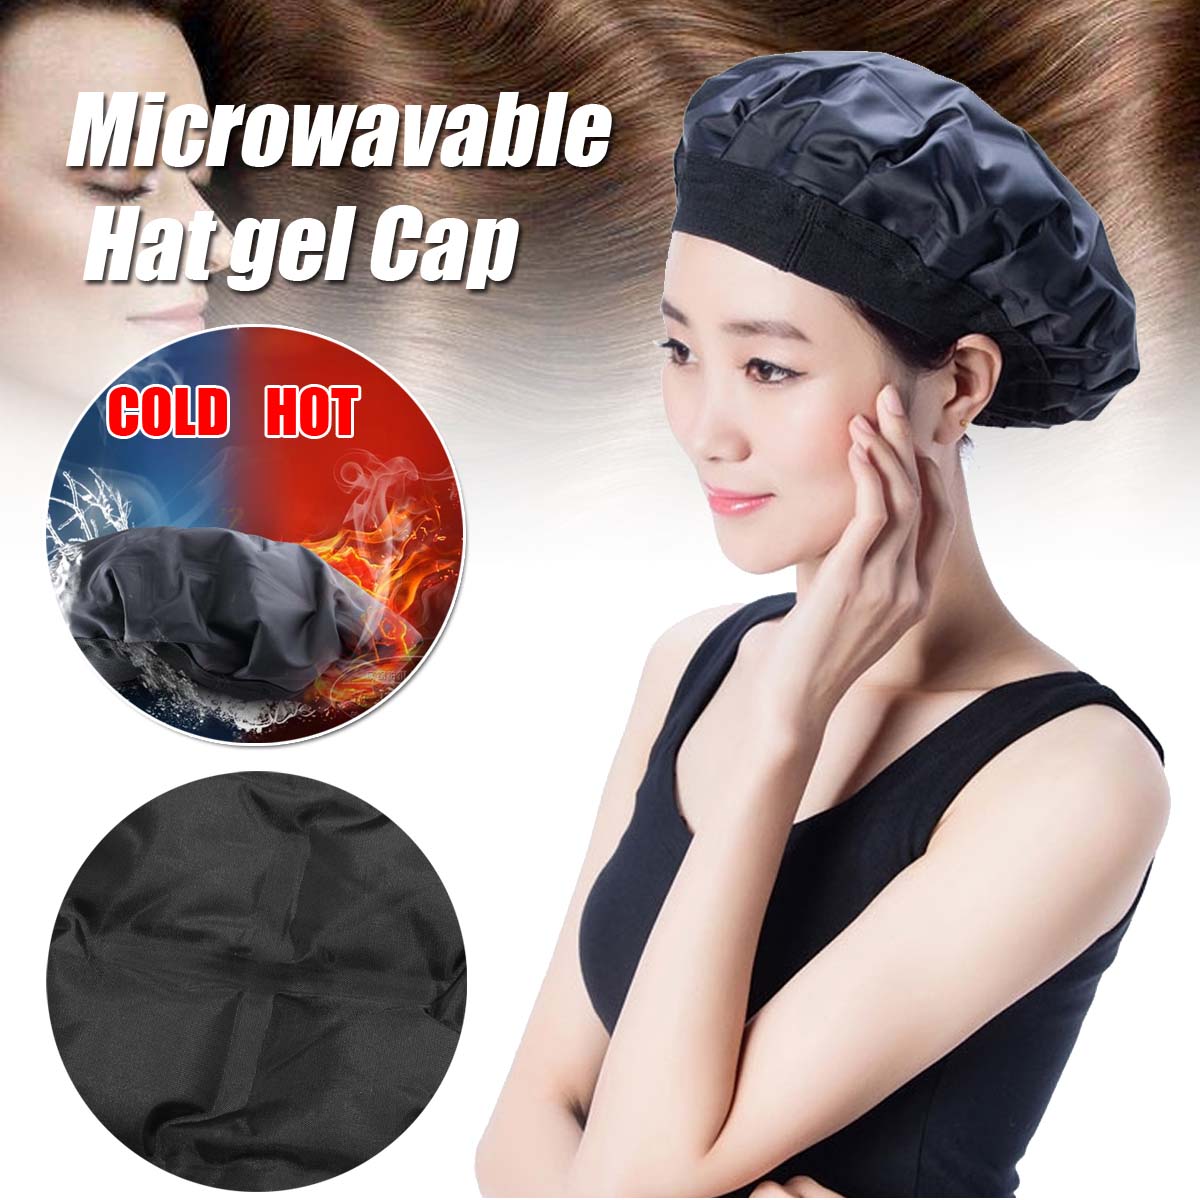 Heated-Cool-Microwavable-Hat-Gel-Cap-Hair-Mask-Treatment-1418922-1